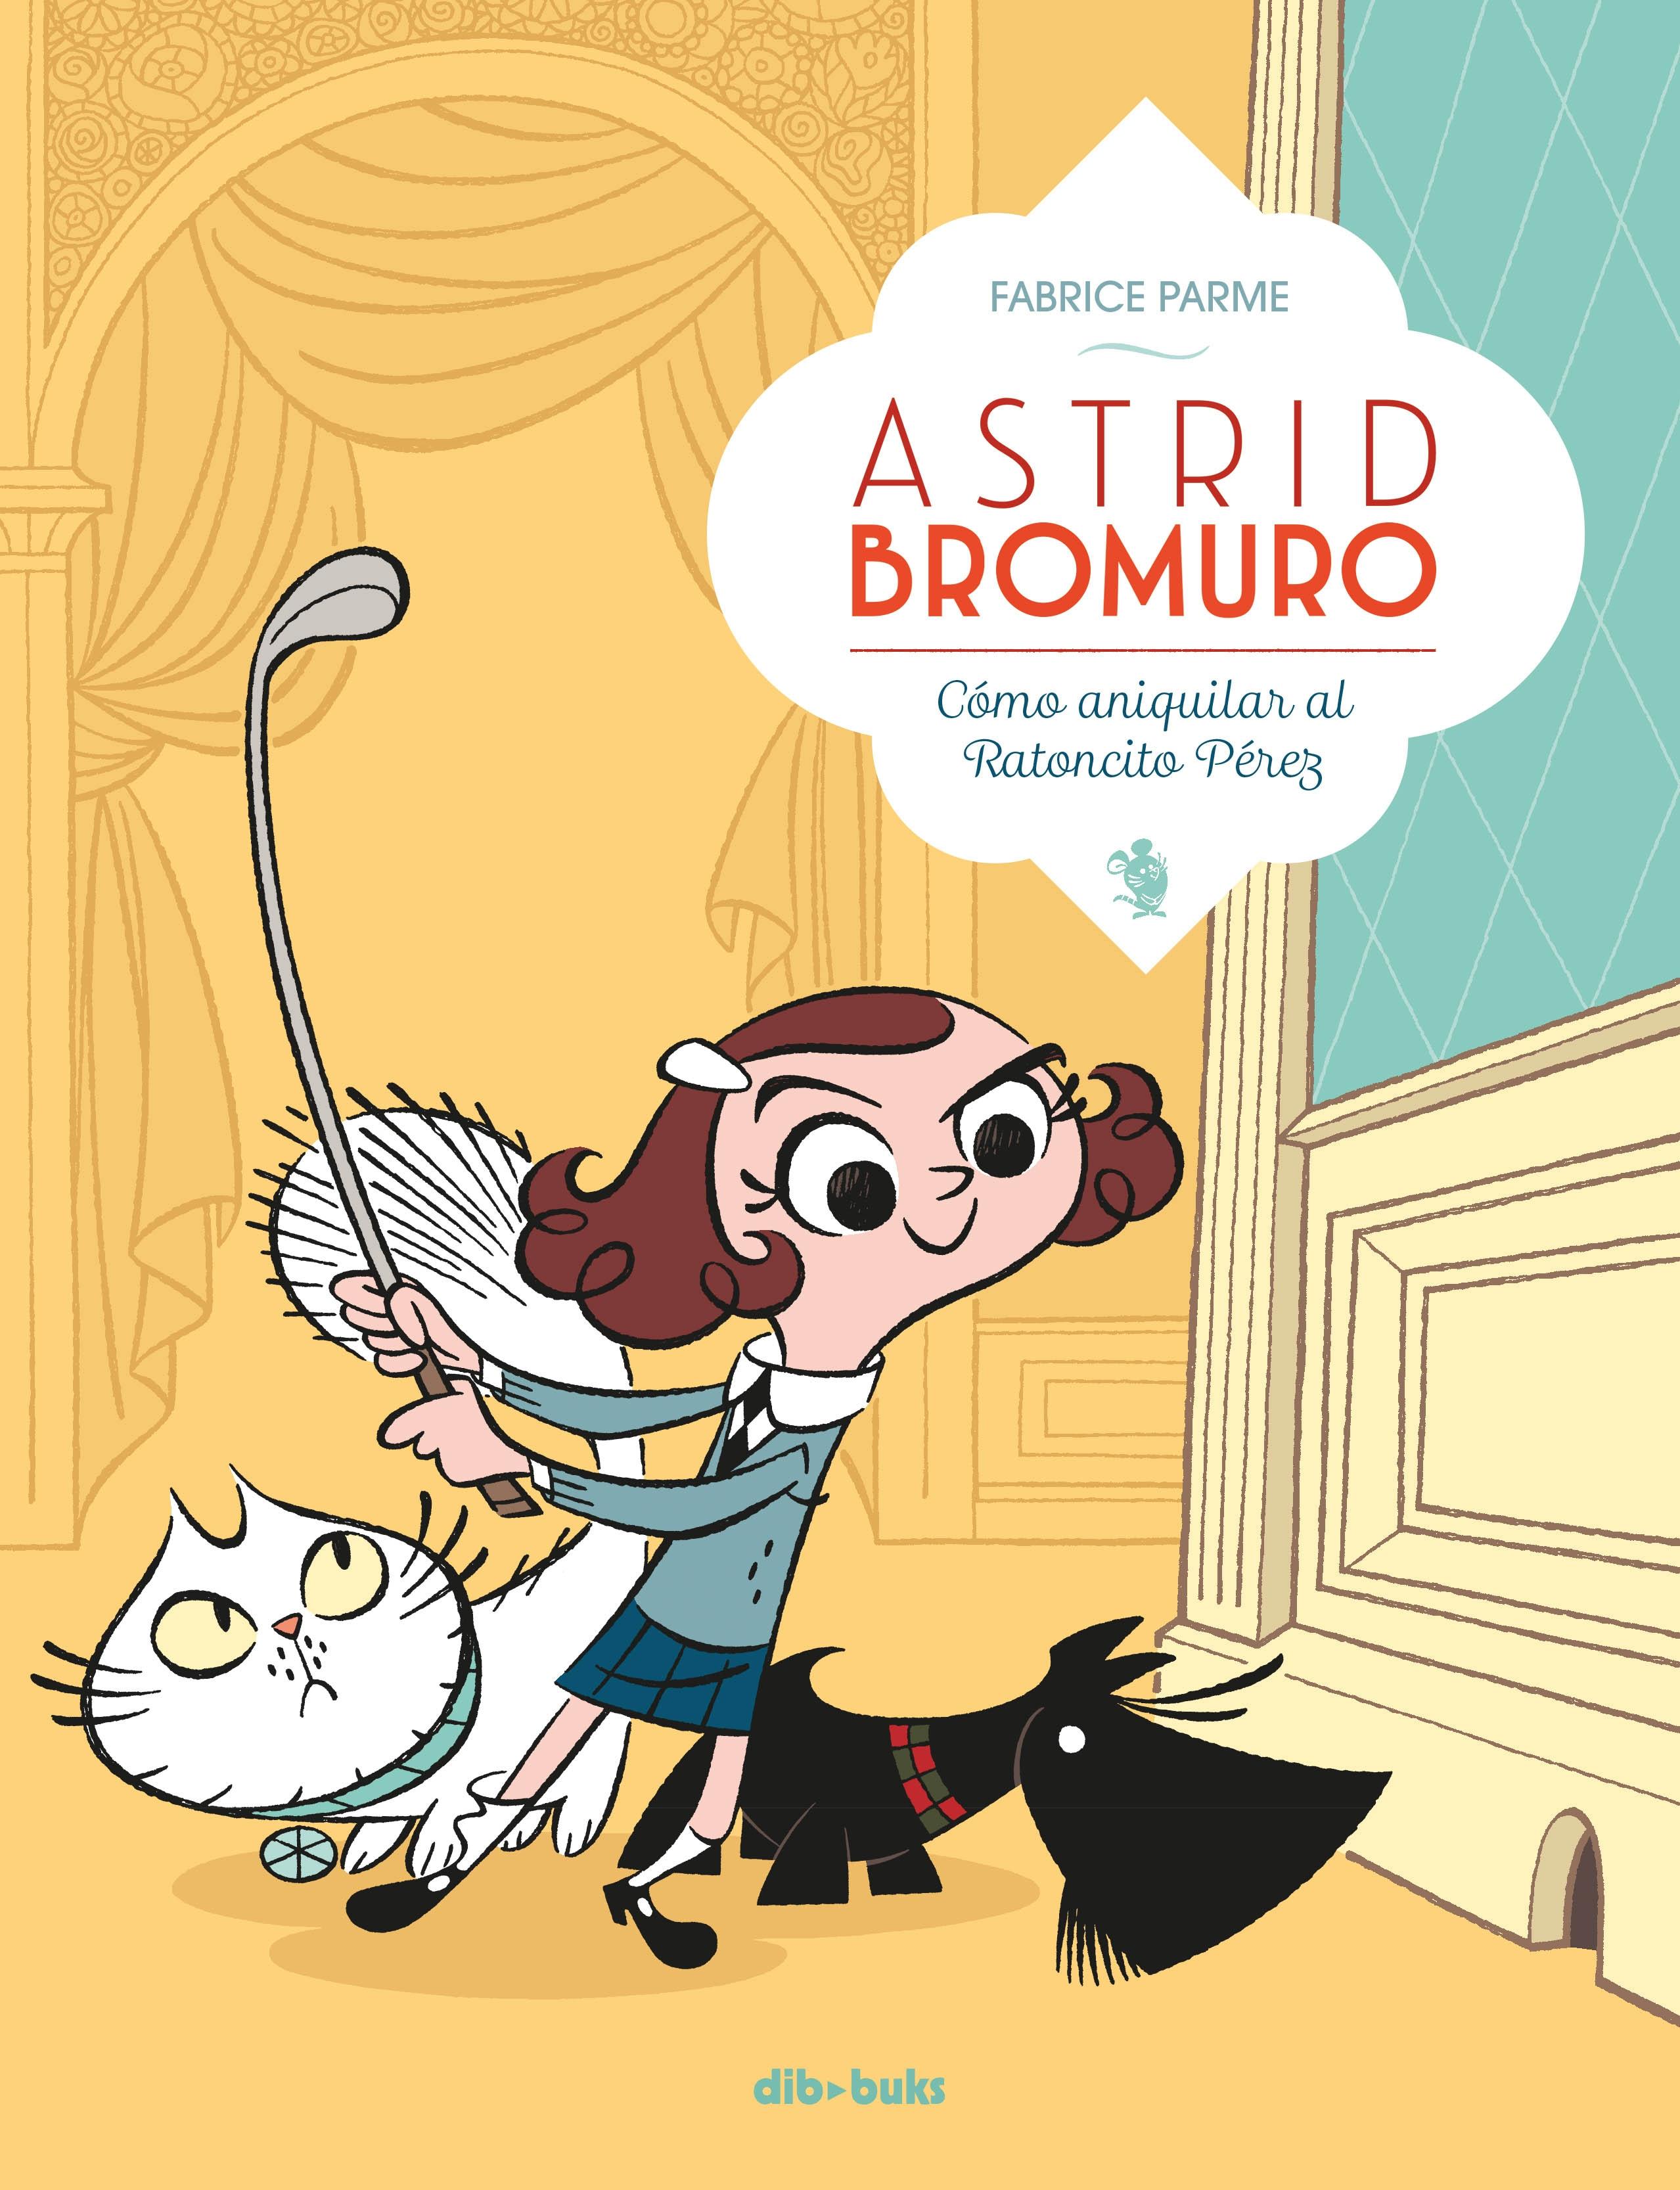 Astrid Bromuro 1 "Cómo Aniquilar al Ratoncito Pérez"